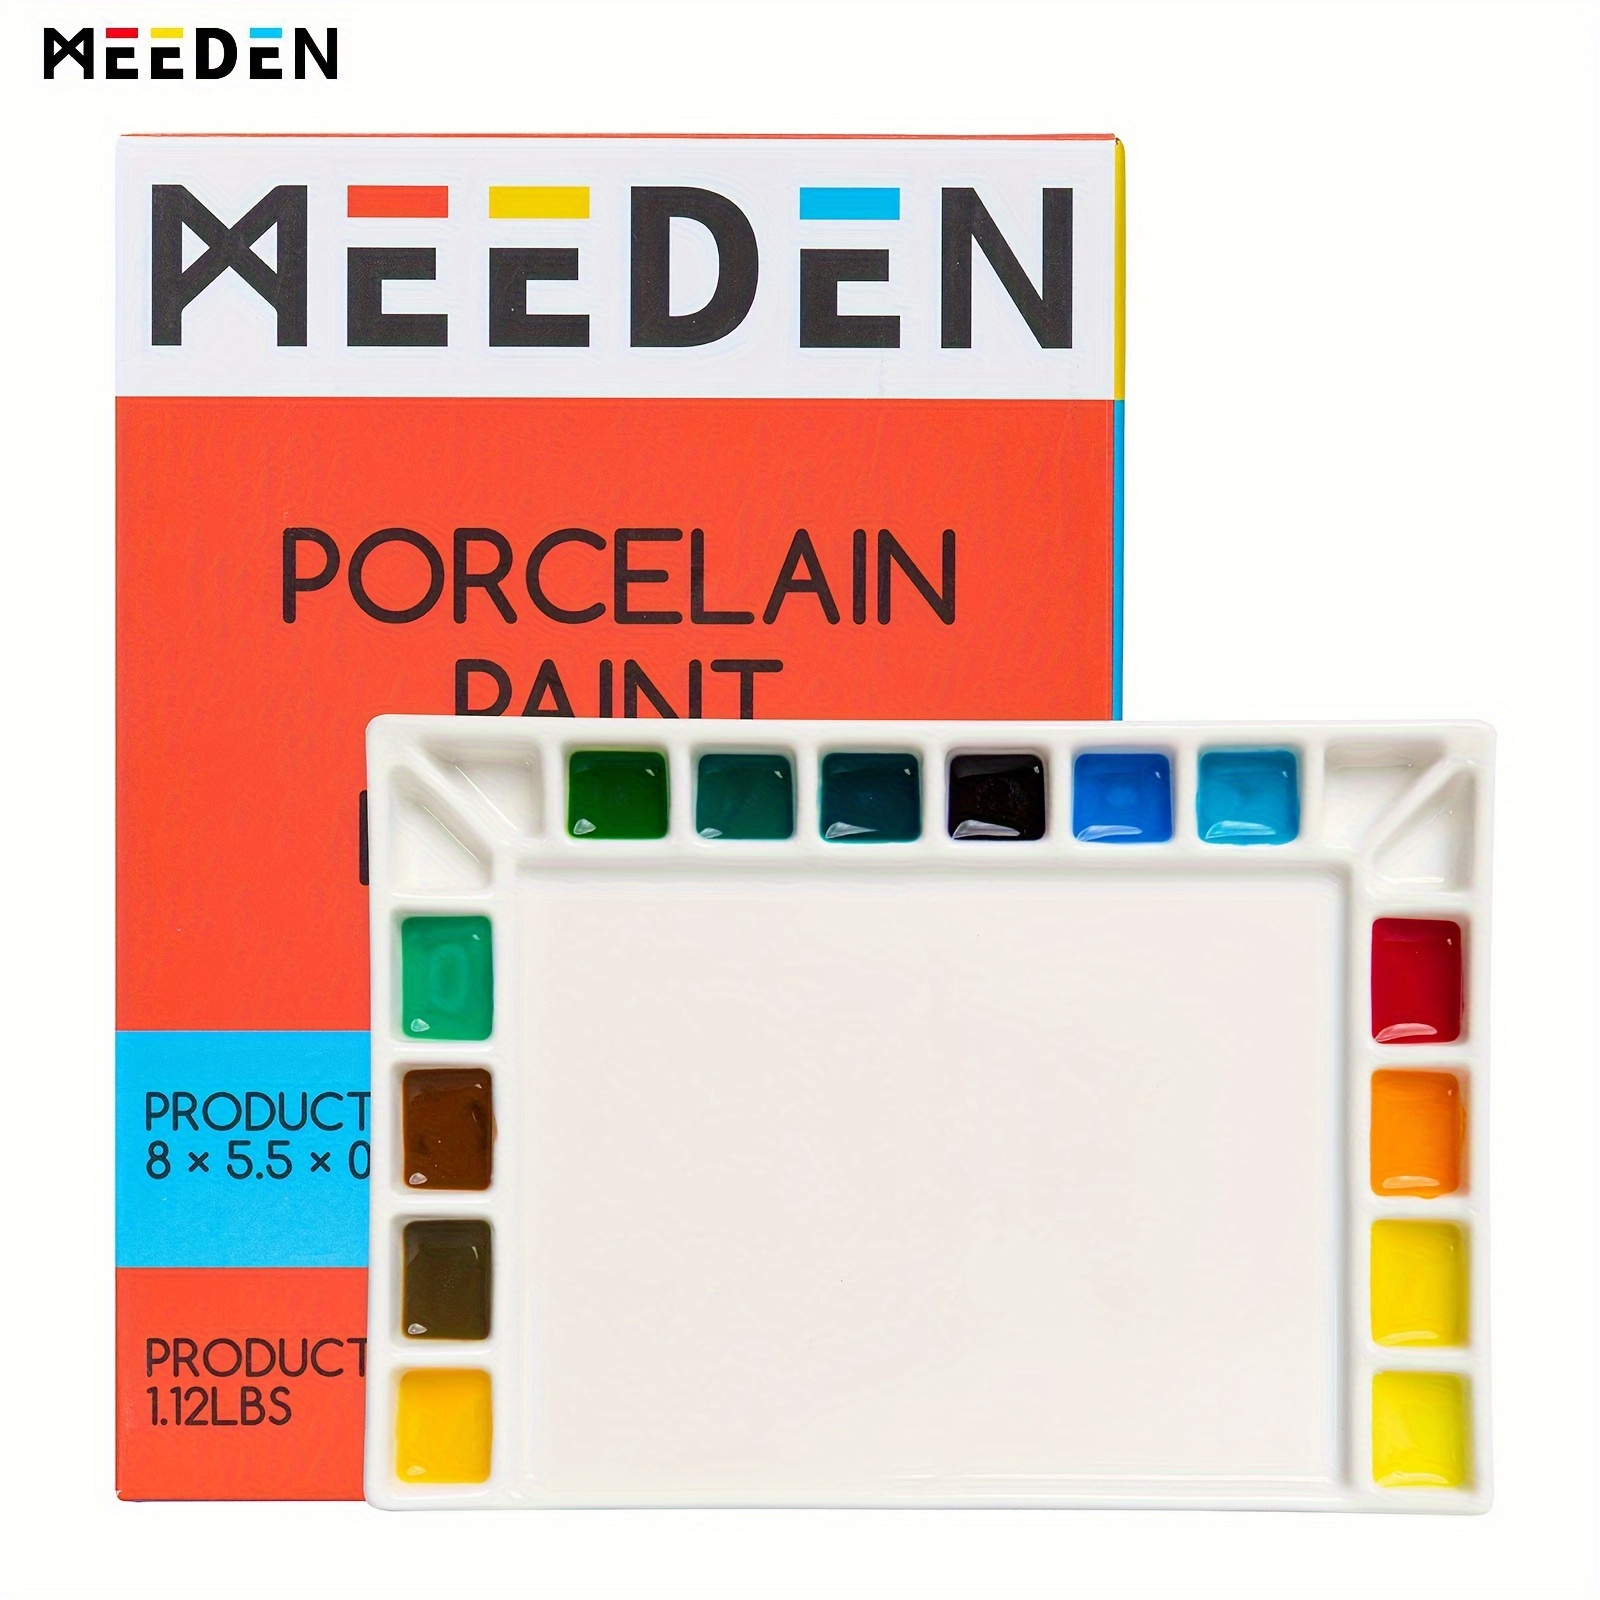 

Meeden 18-well Porcelain Artist Paint Palette, Mixing Art Ceramic Watercolor Paint Palette For Watercolor Gouache Acrylic Oil Painting, Rectangle 8 By 5-1/2-inch